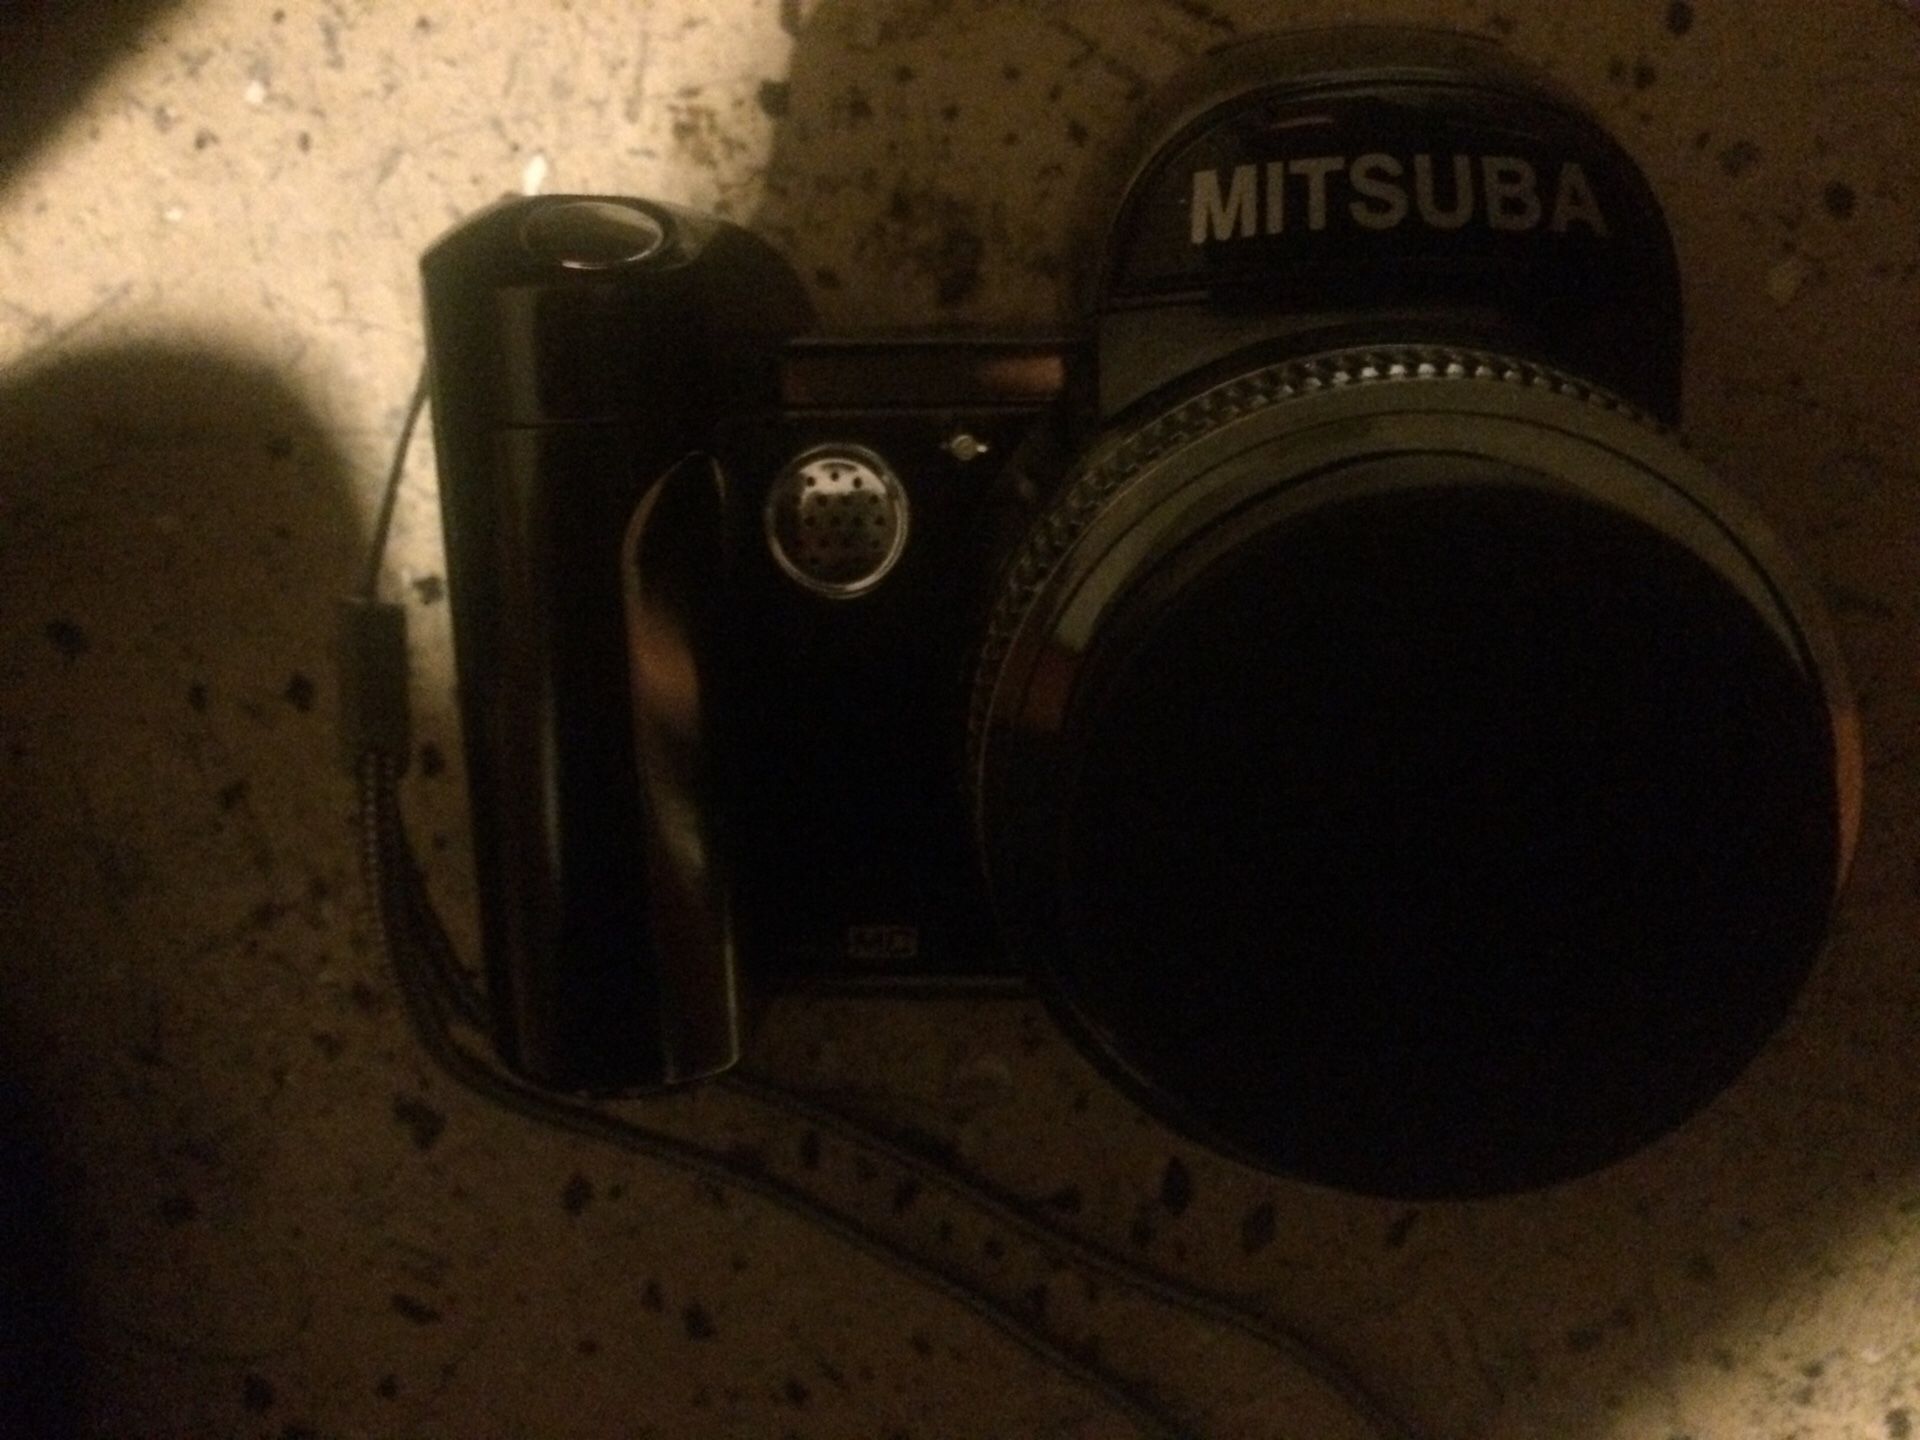 Mitsuba digital camera